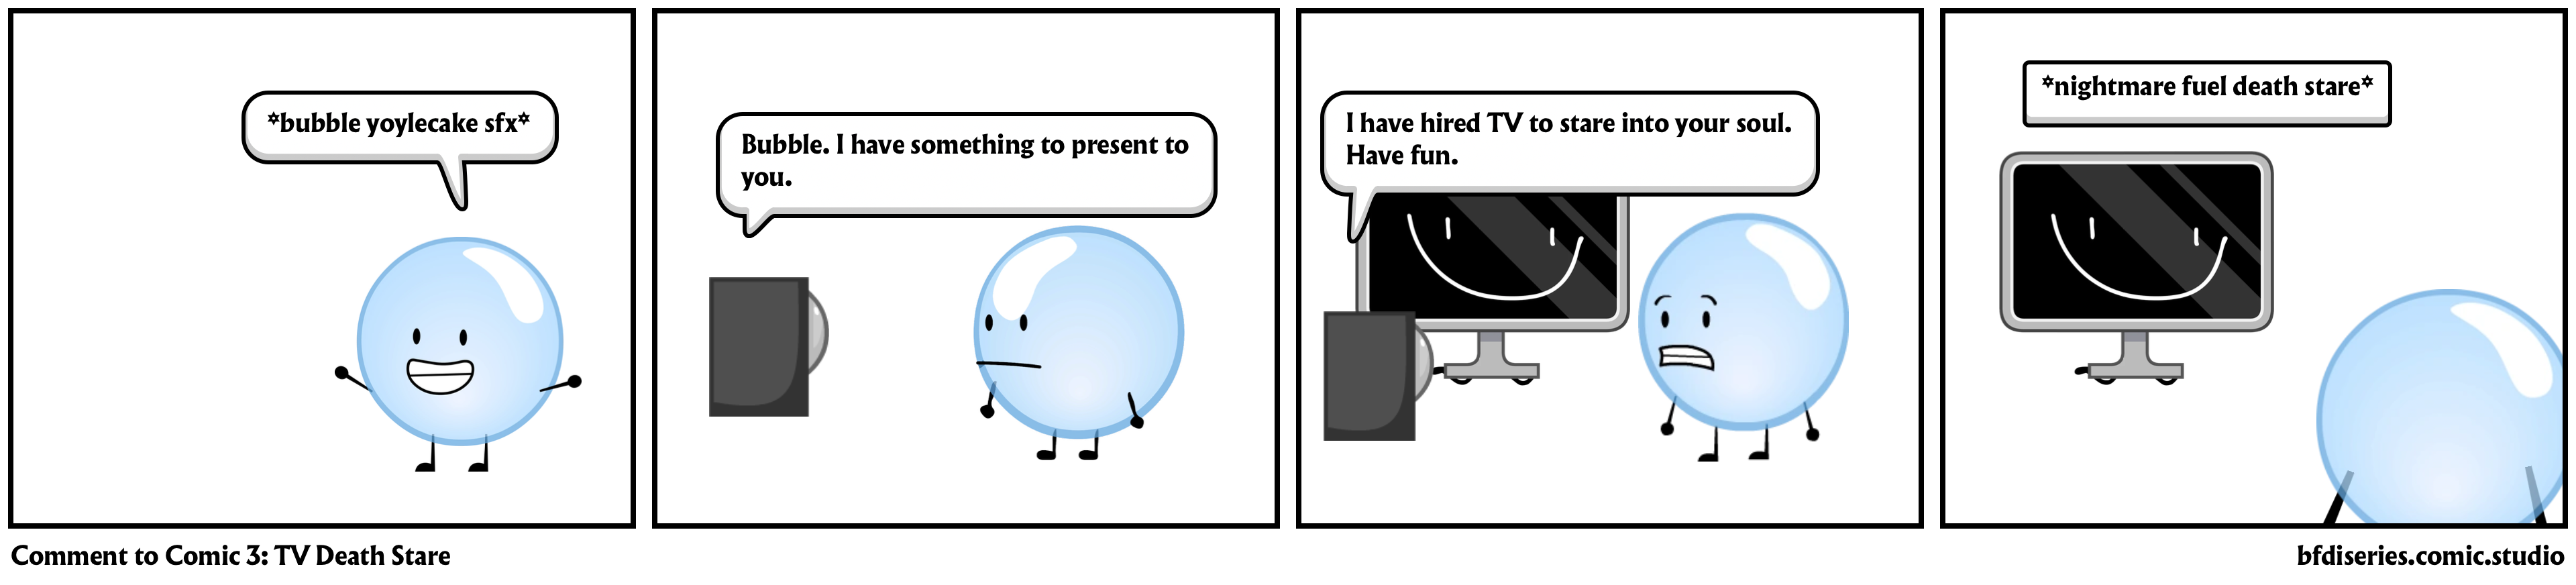 Comment to Comic 3: TV Death Stare